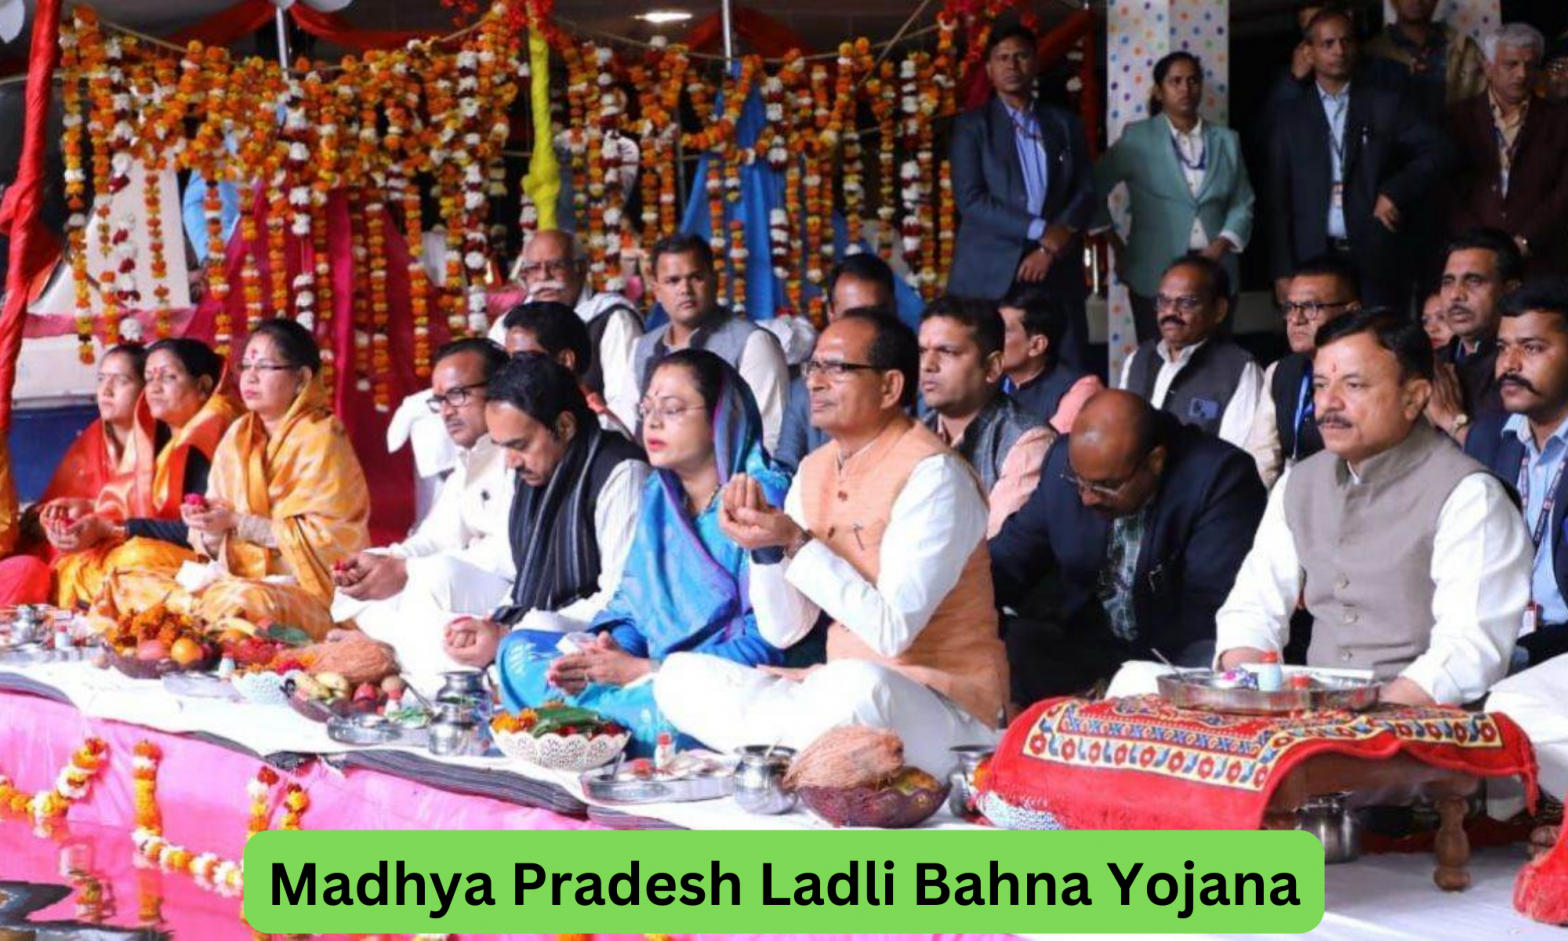 Ladli Bahna Yojana in Madhya Pradesh